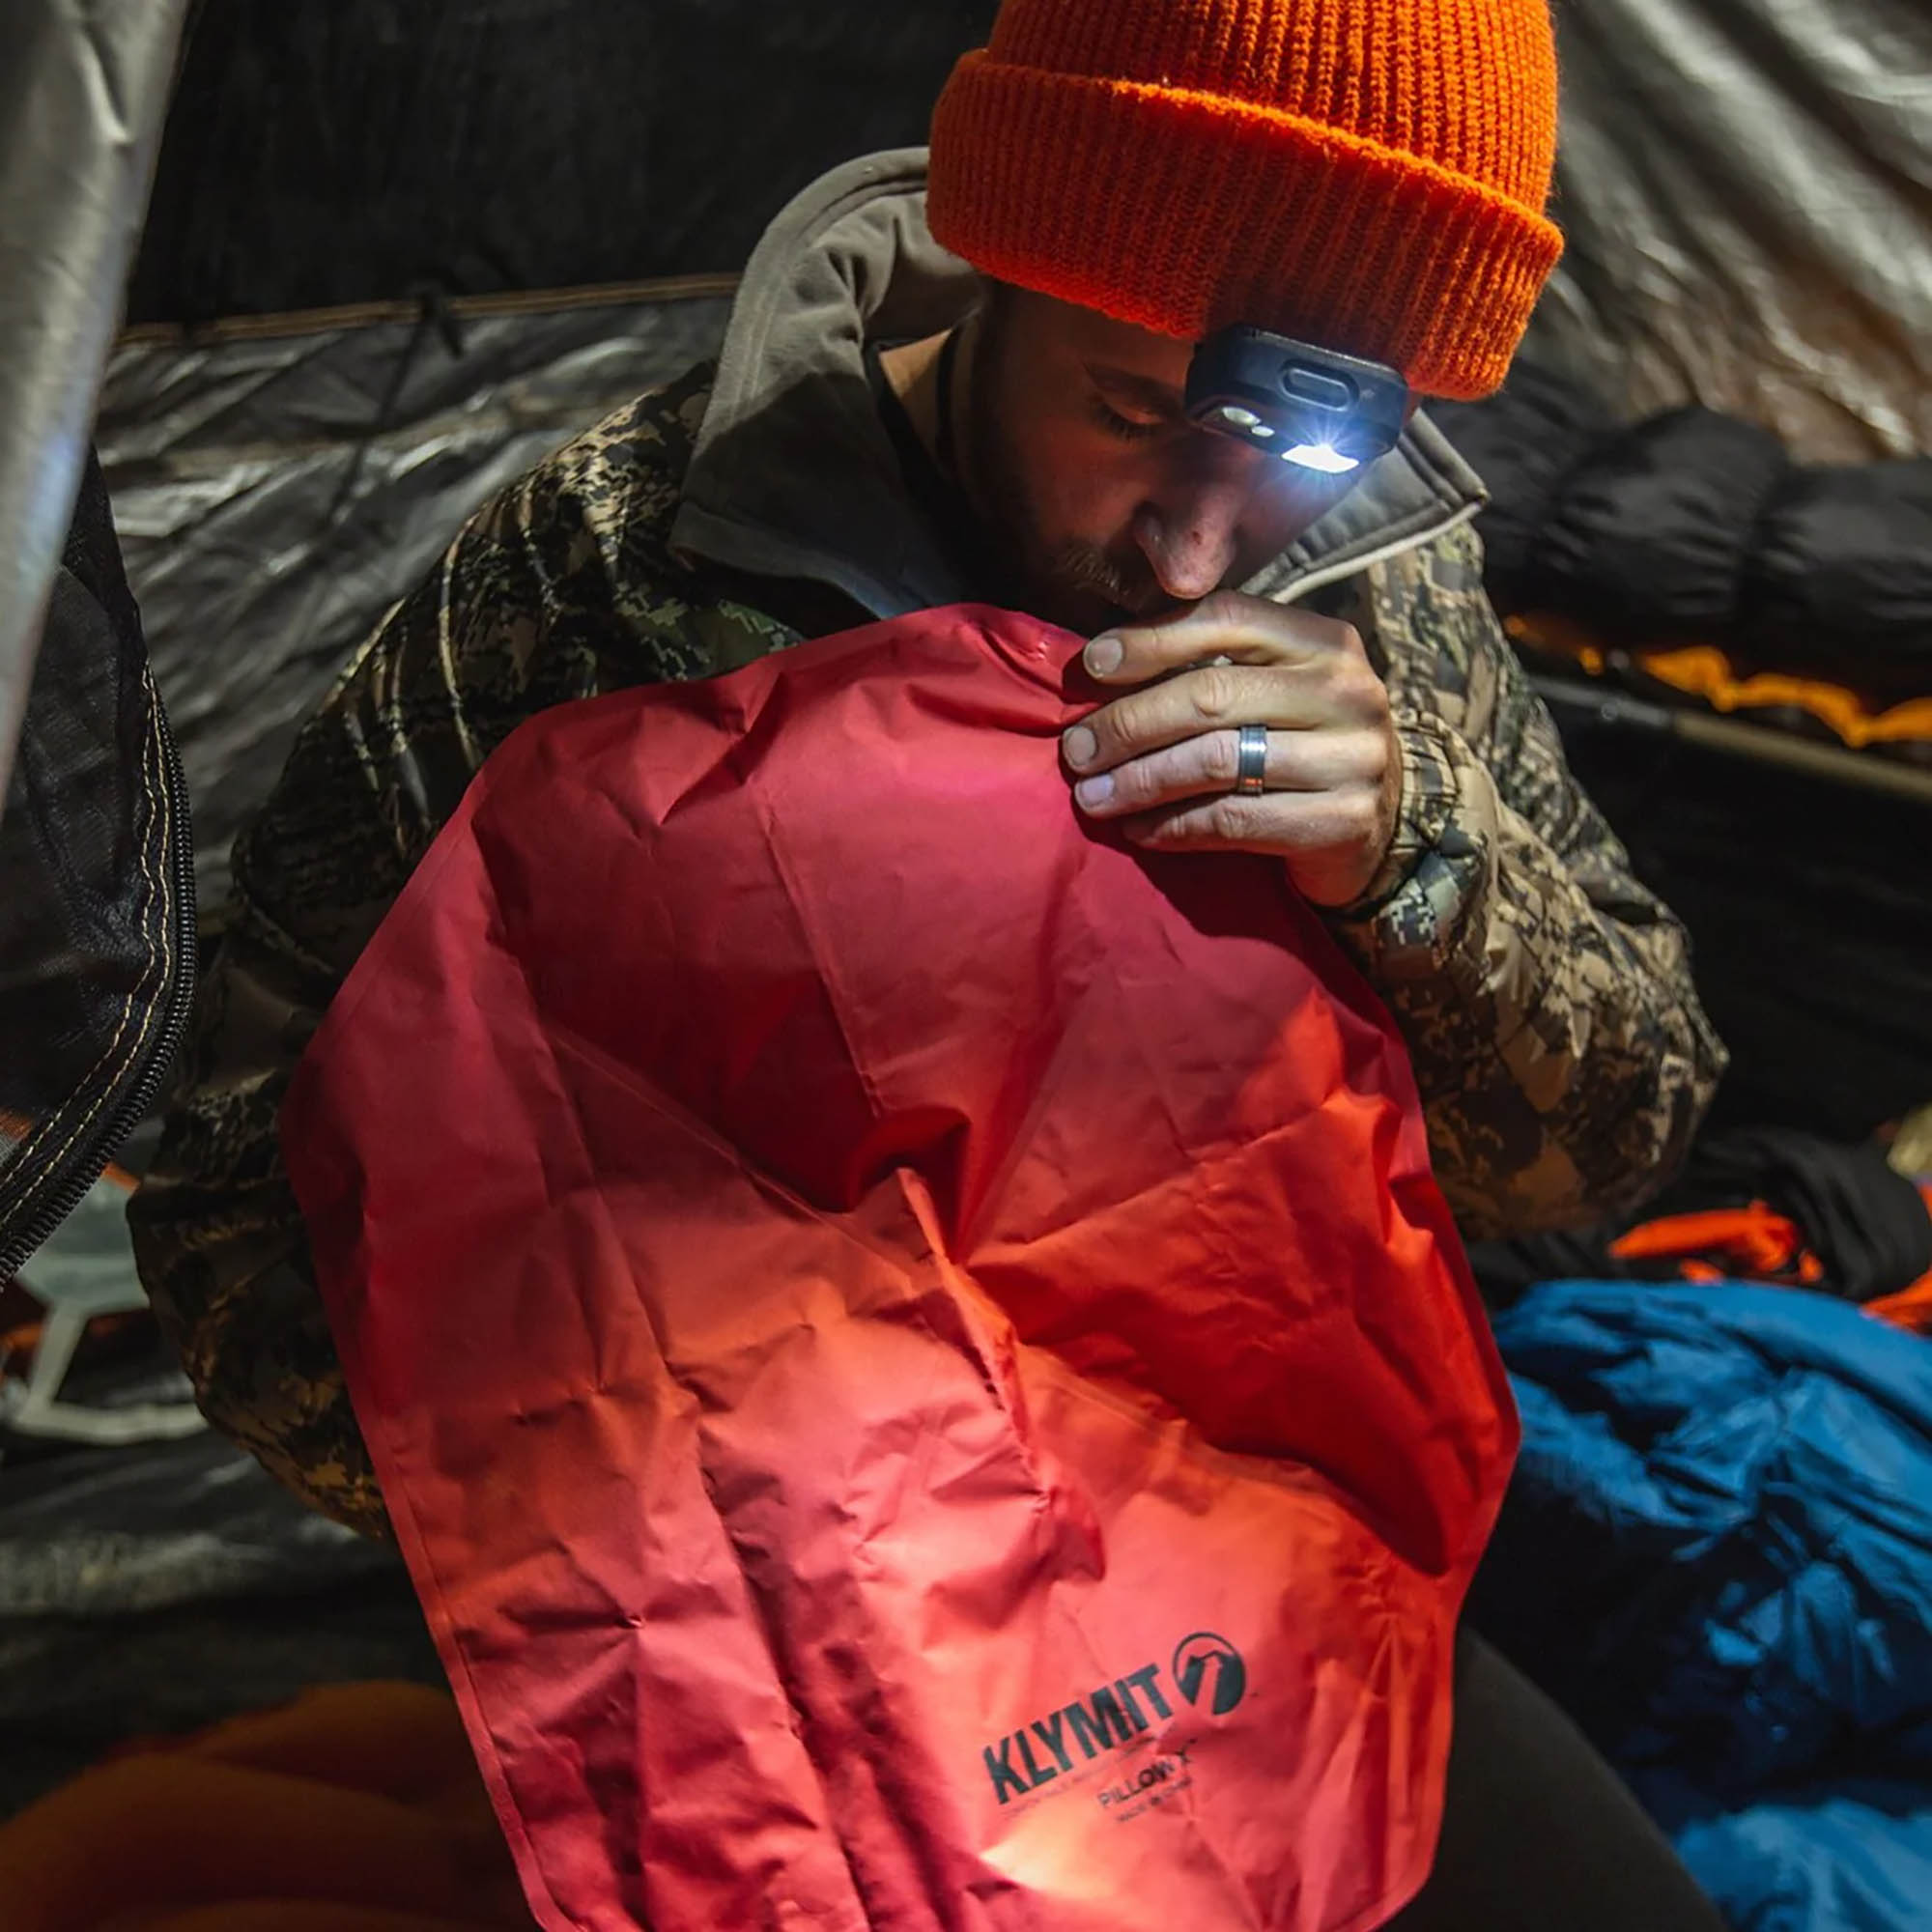 Klymit Pillow X Inflatable Camping Pillow